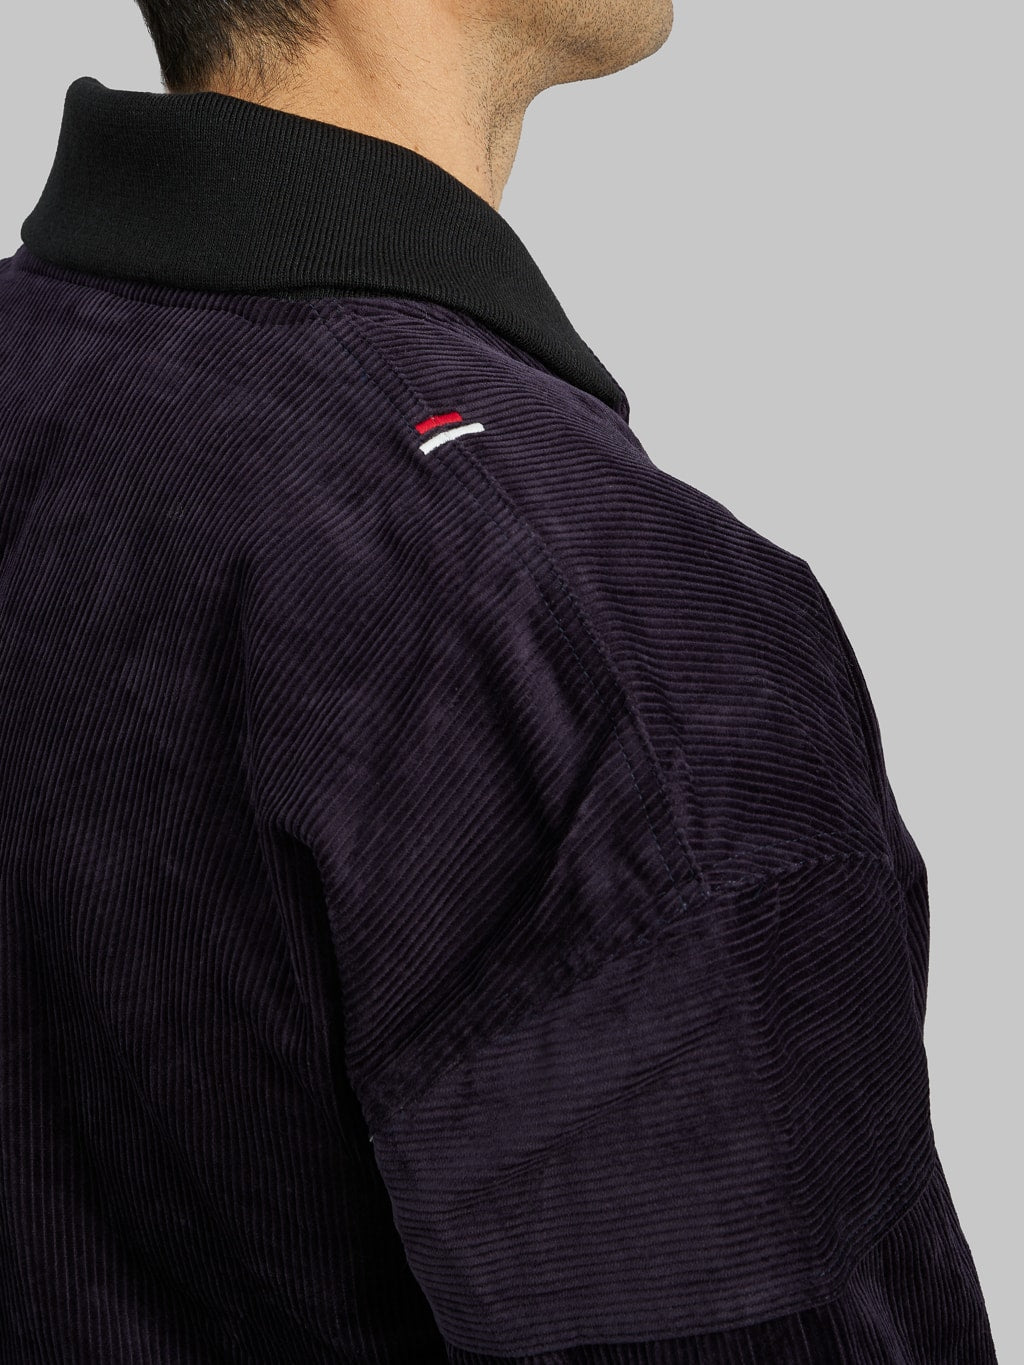 Tanuki Sazanami Corduroy natural indigo dyed Jacket  embroided logo